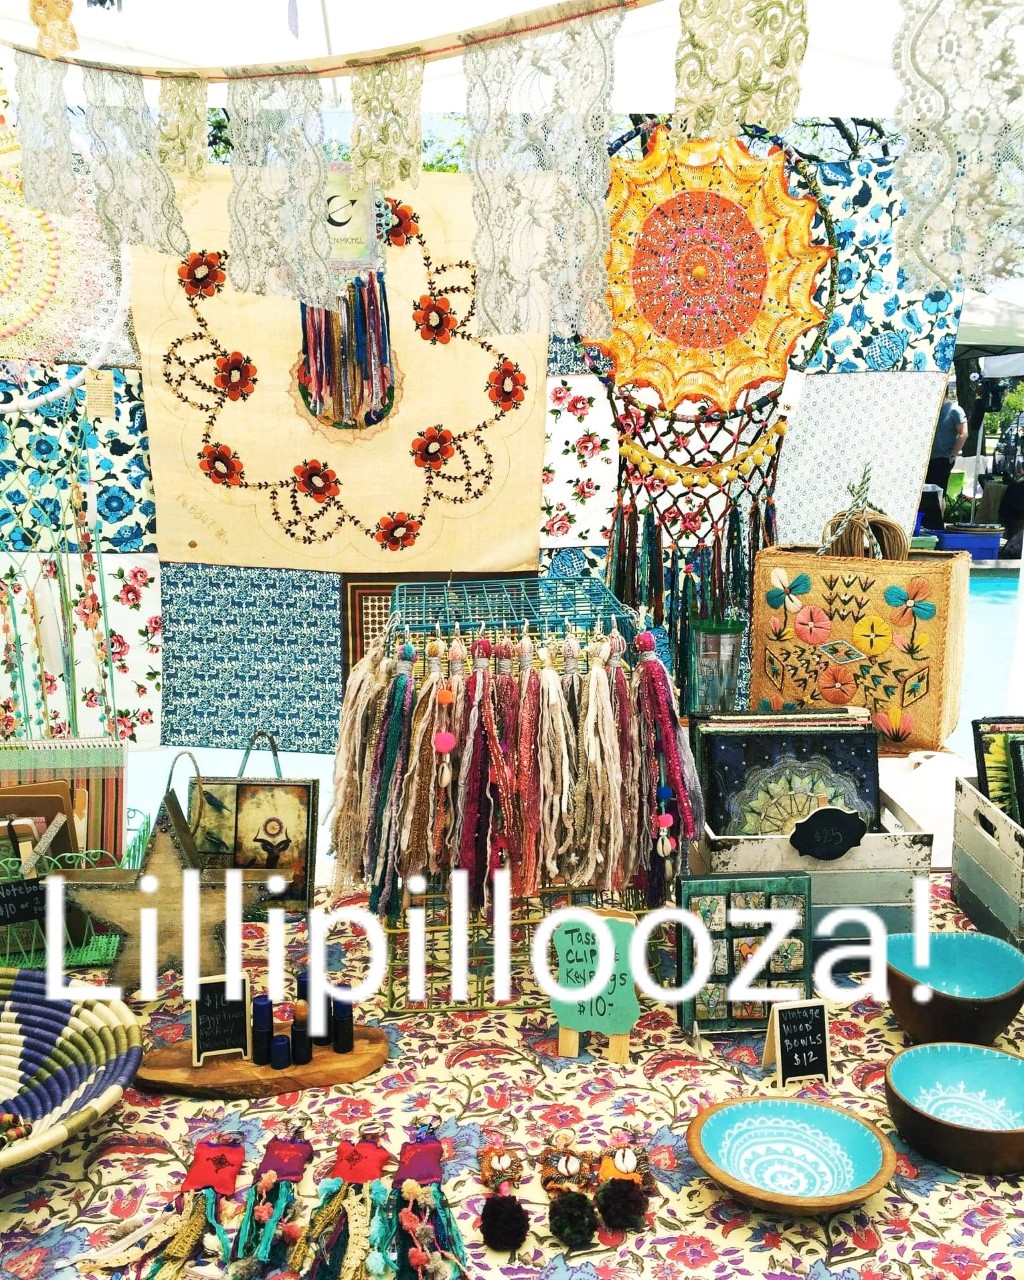 Garage Sale Trail leads to Lilli Pilli with Lillipillooza